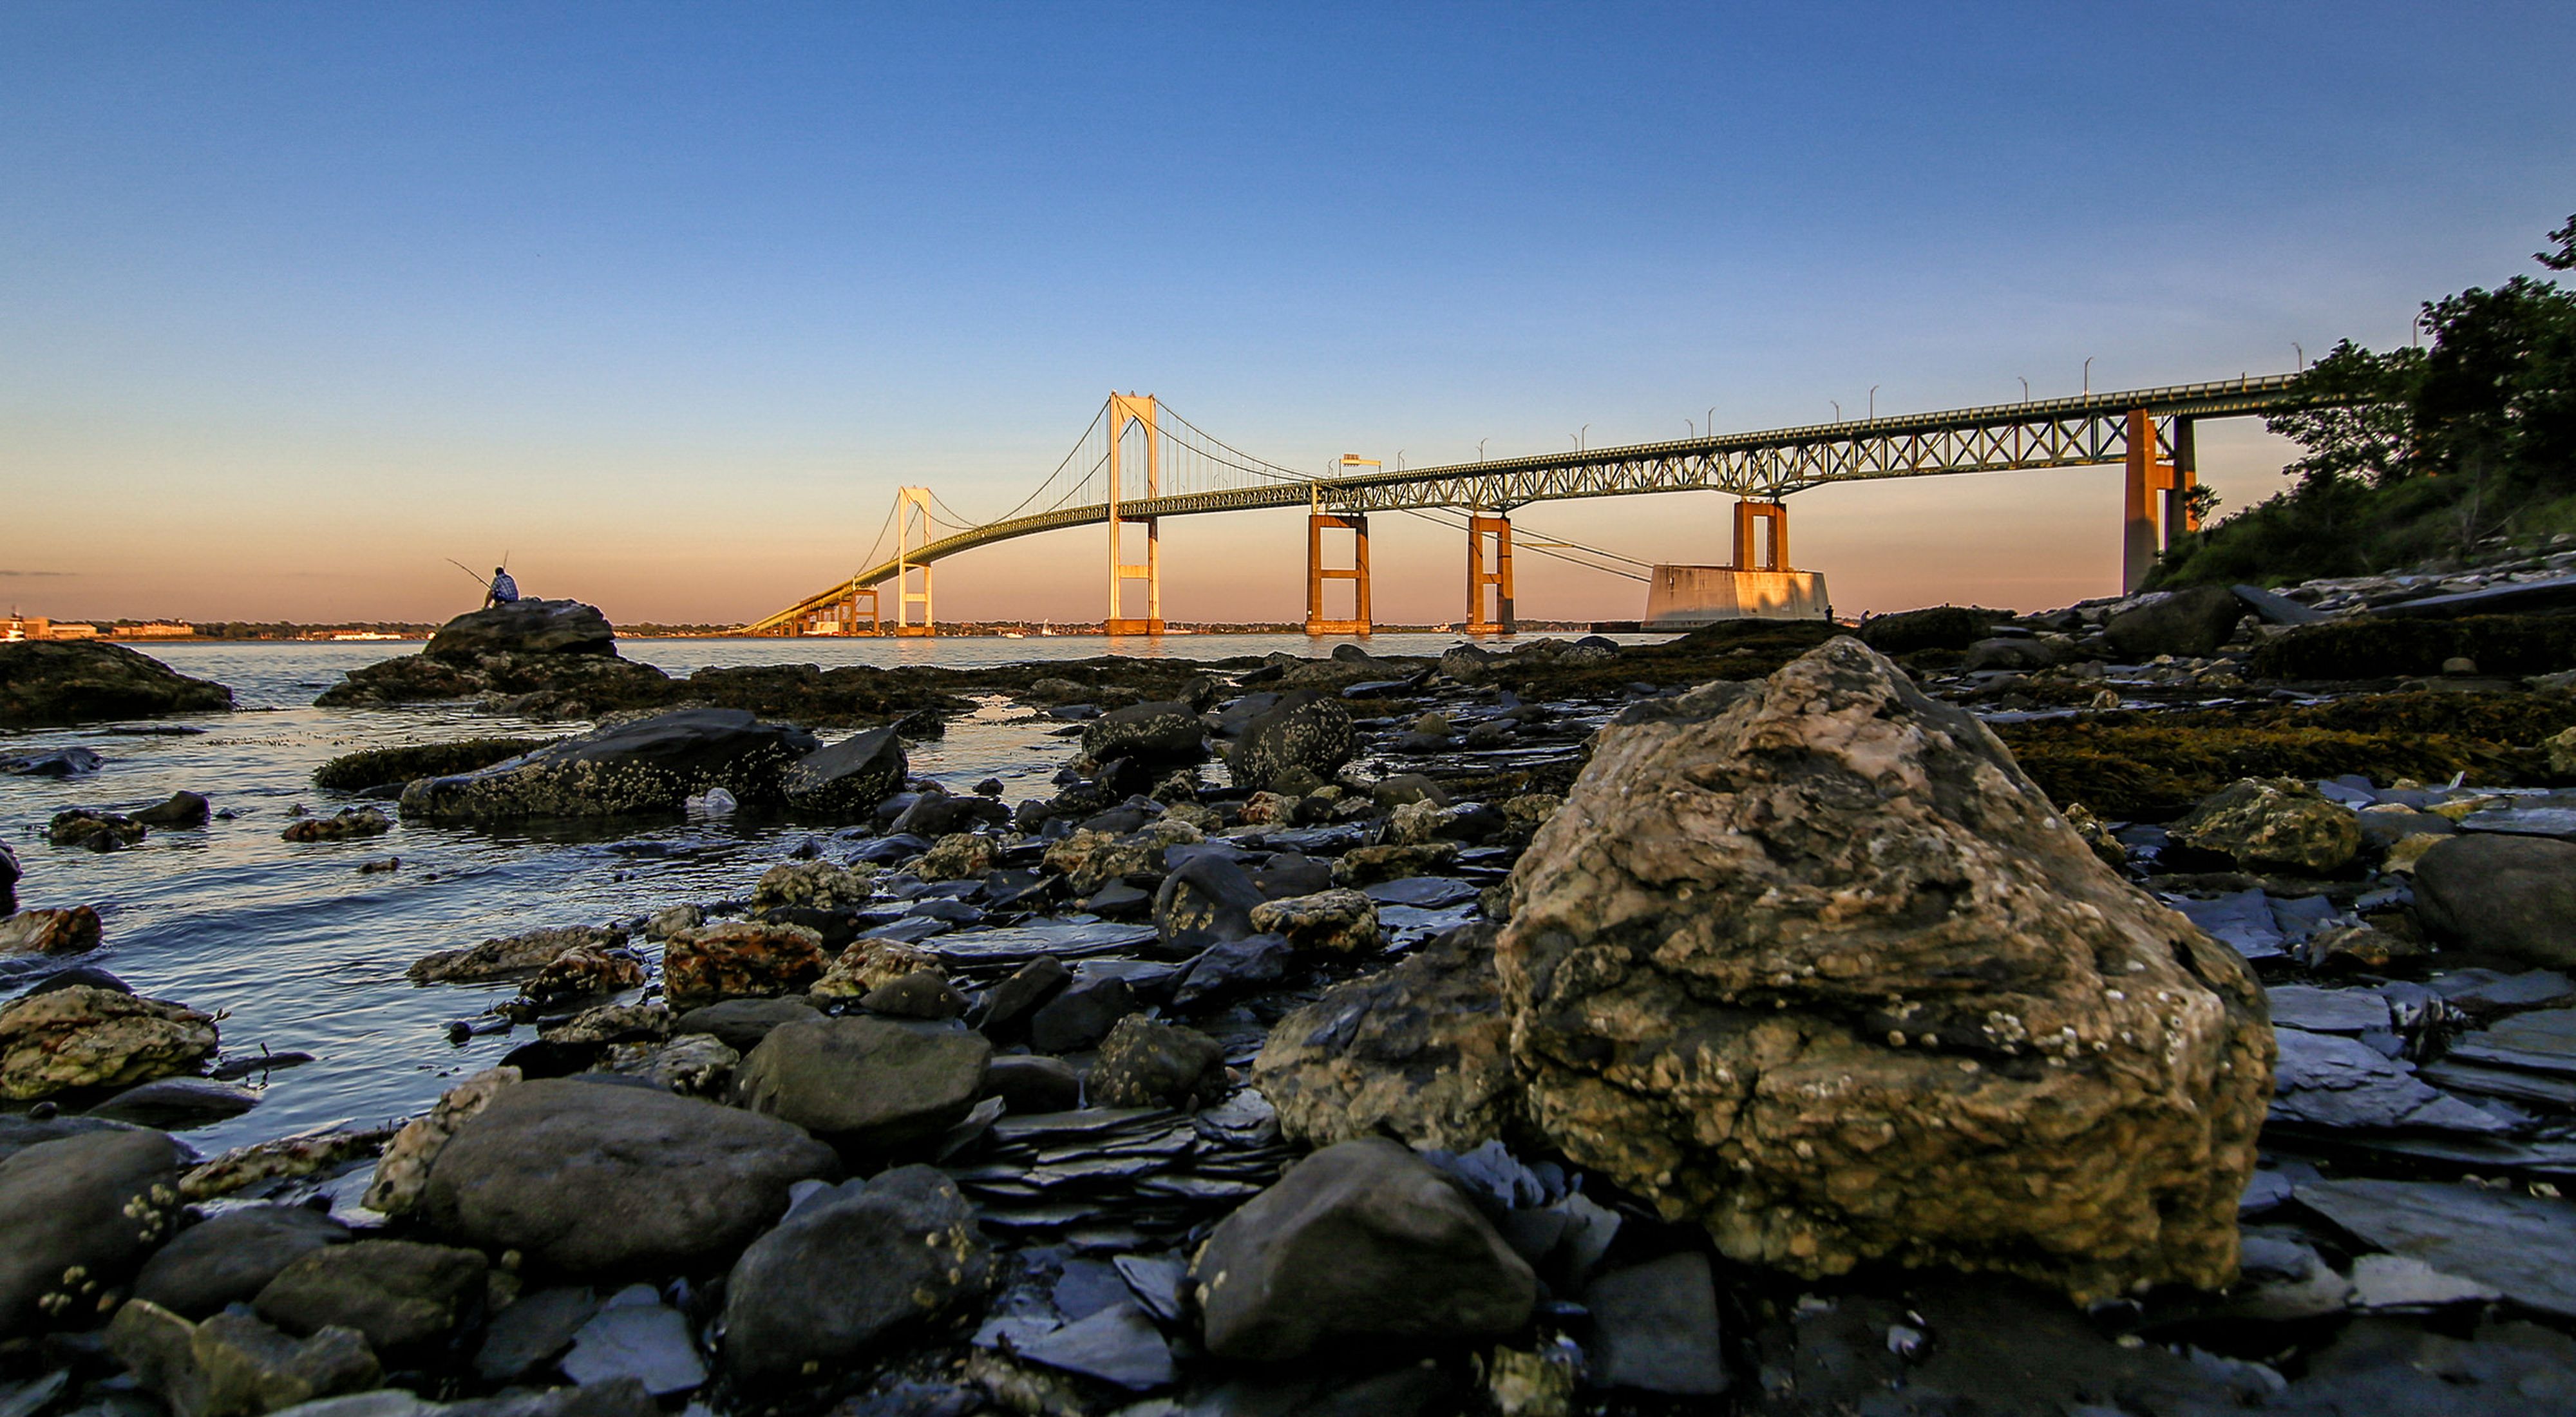 Rhode Island's Newport Bridge can be seen in the golden light of sunset beyond the rocky shoreline.